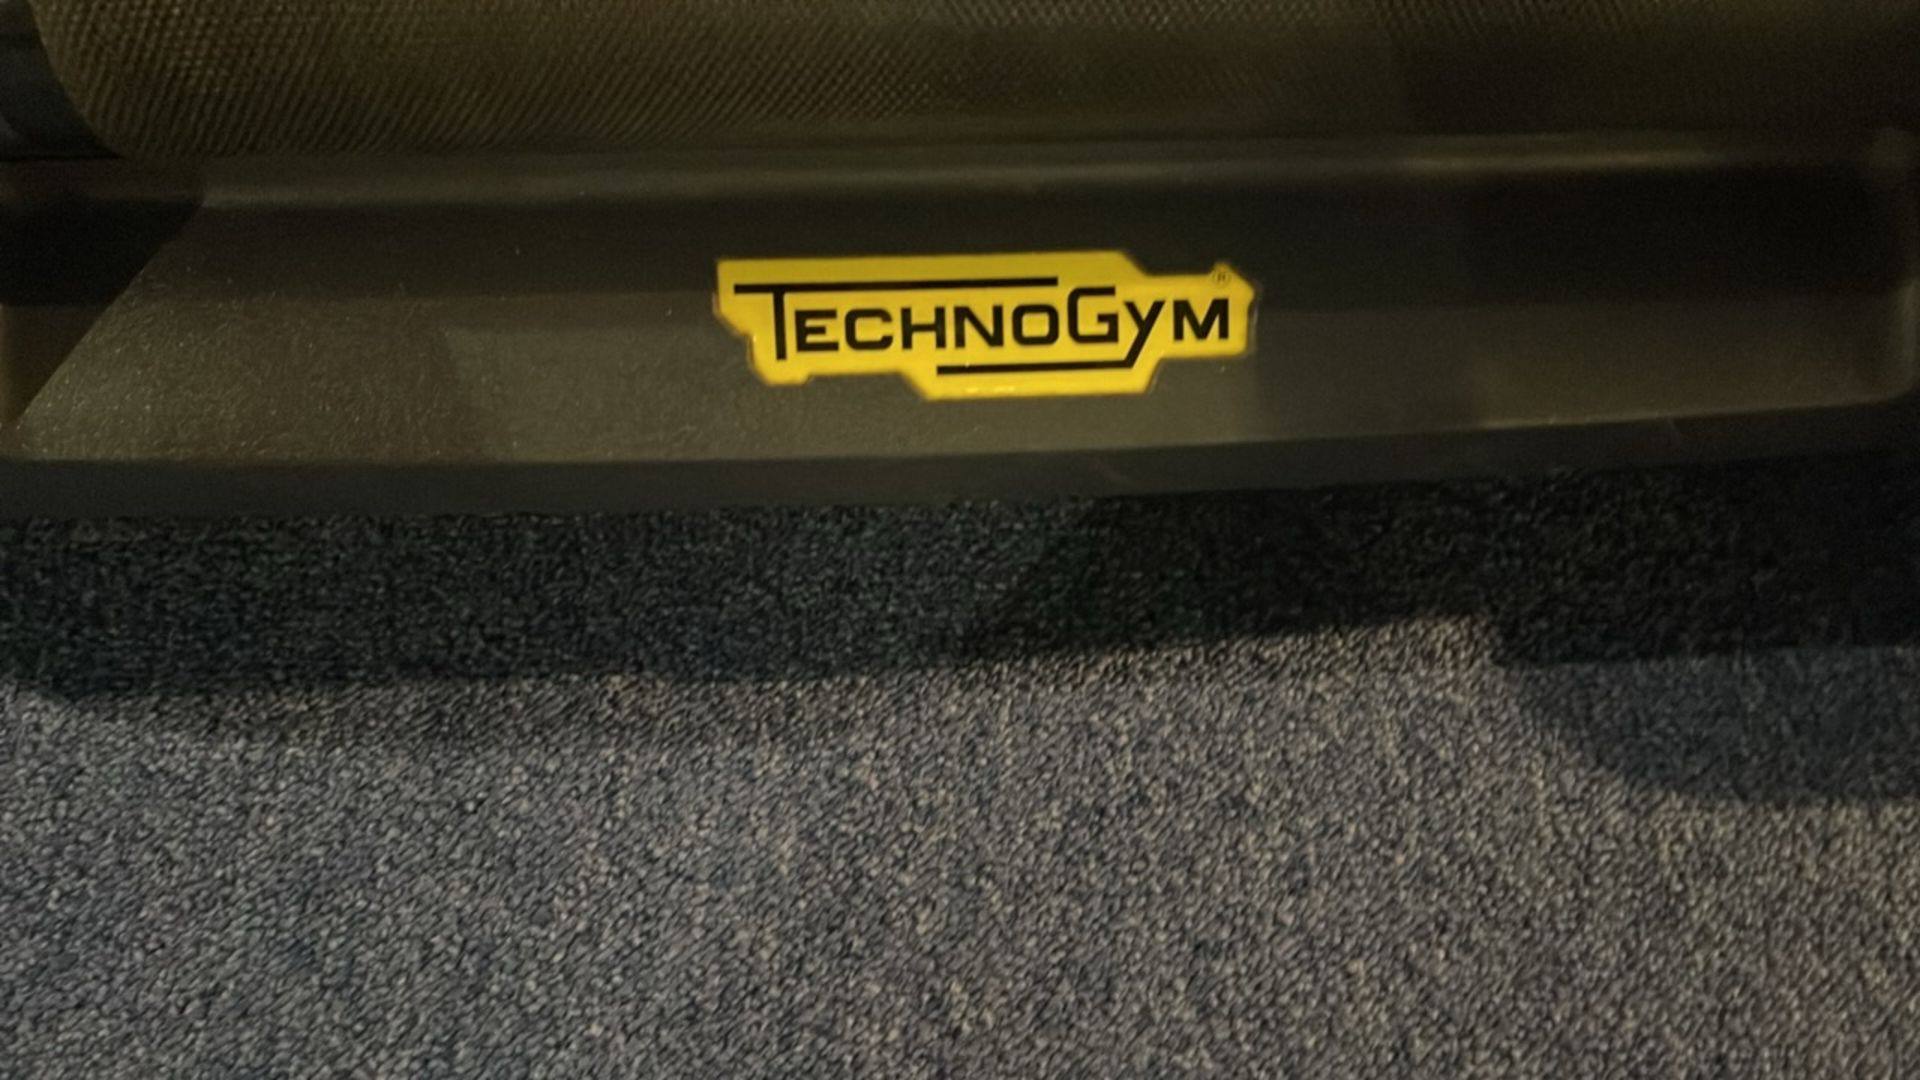 Technogym Treadmill 1000 - Image 4 of 5